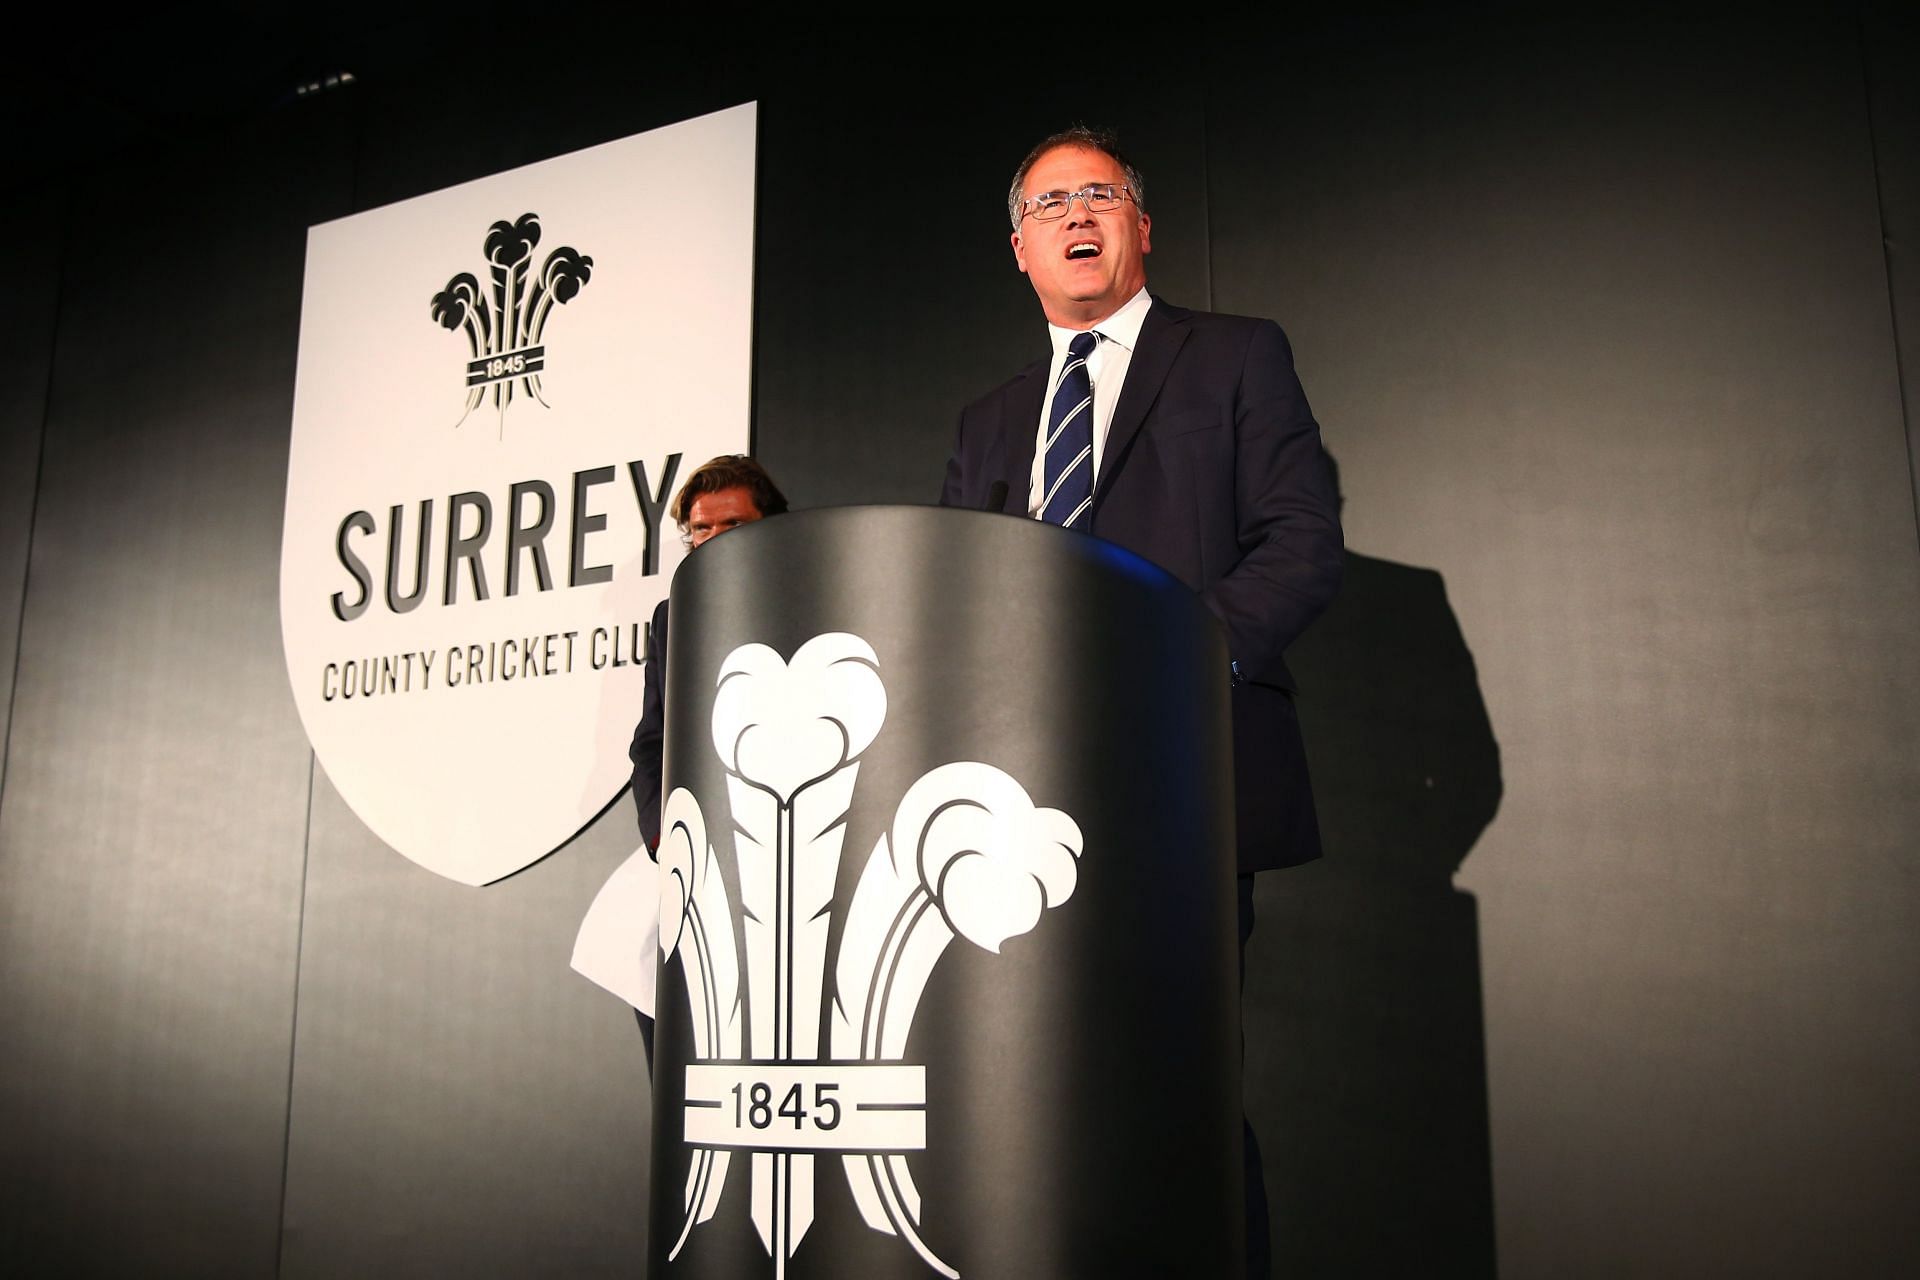 Surrey County Cricket Club Annual Awards